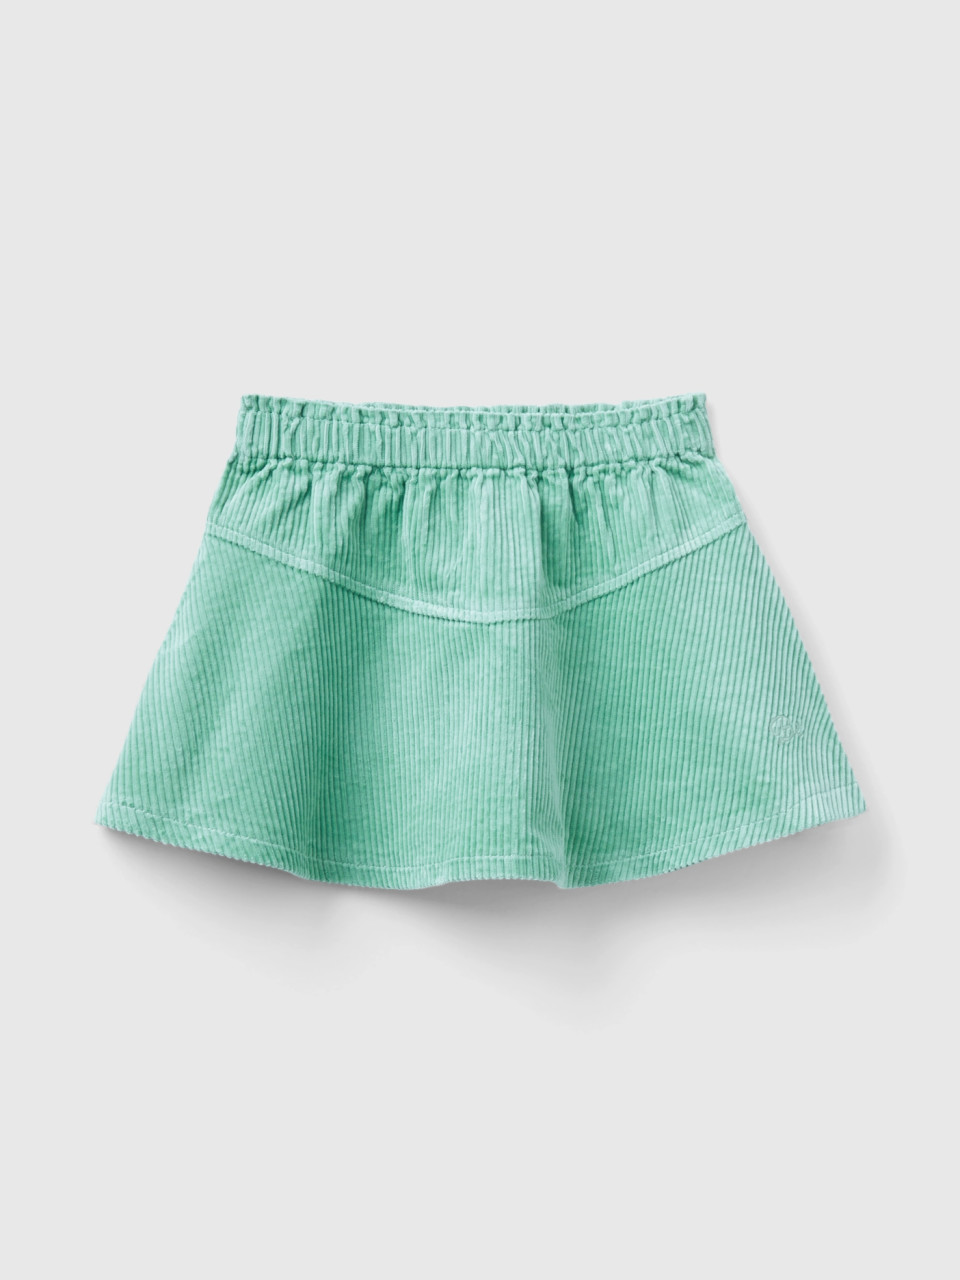 Benetton, Corduroy Mini Skirt, Aqua, Kids